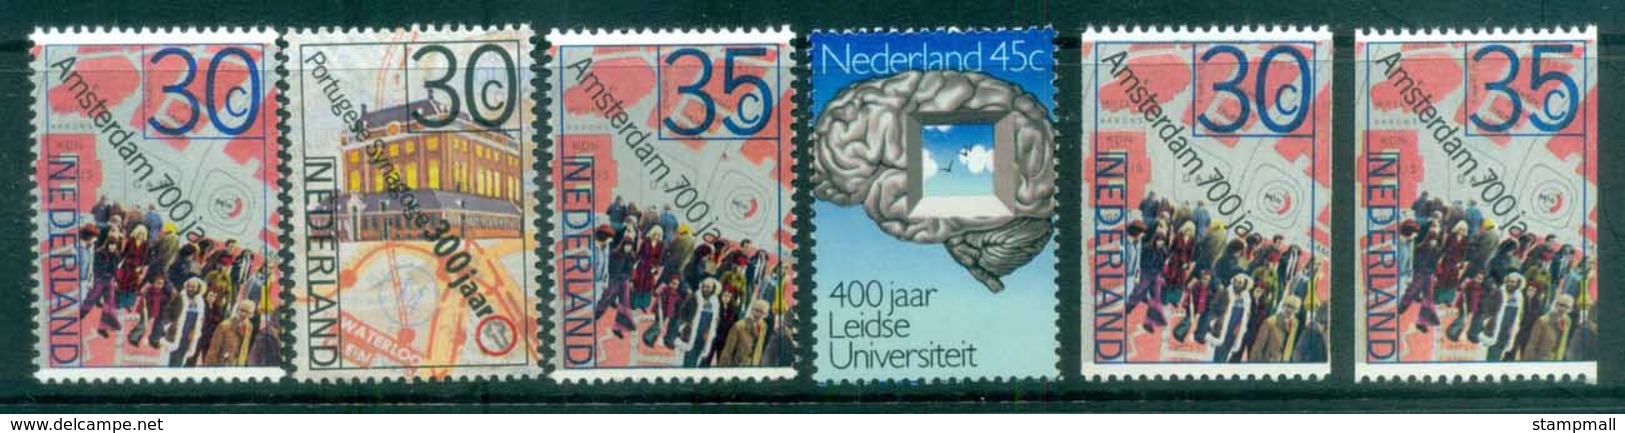 Netherlands 1975 Amsterdam MUH Lot76748 - Unclassified